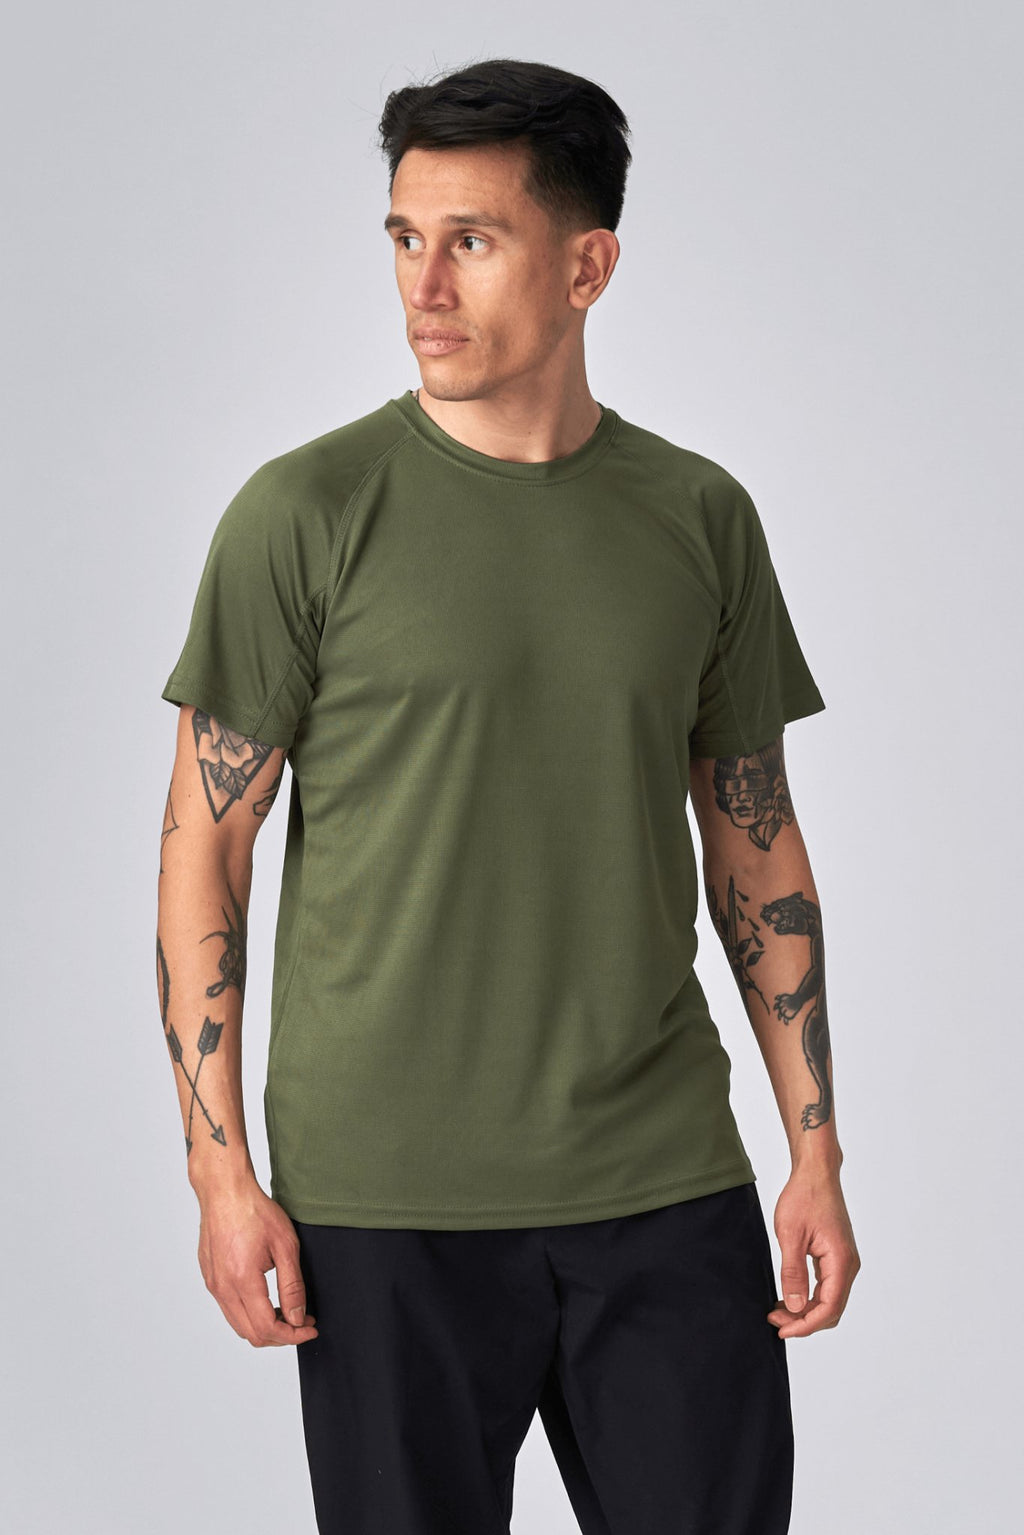 Majica za obuku - vojska zelena